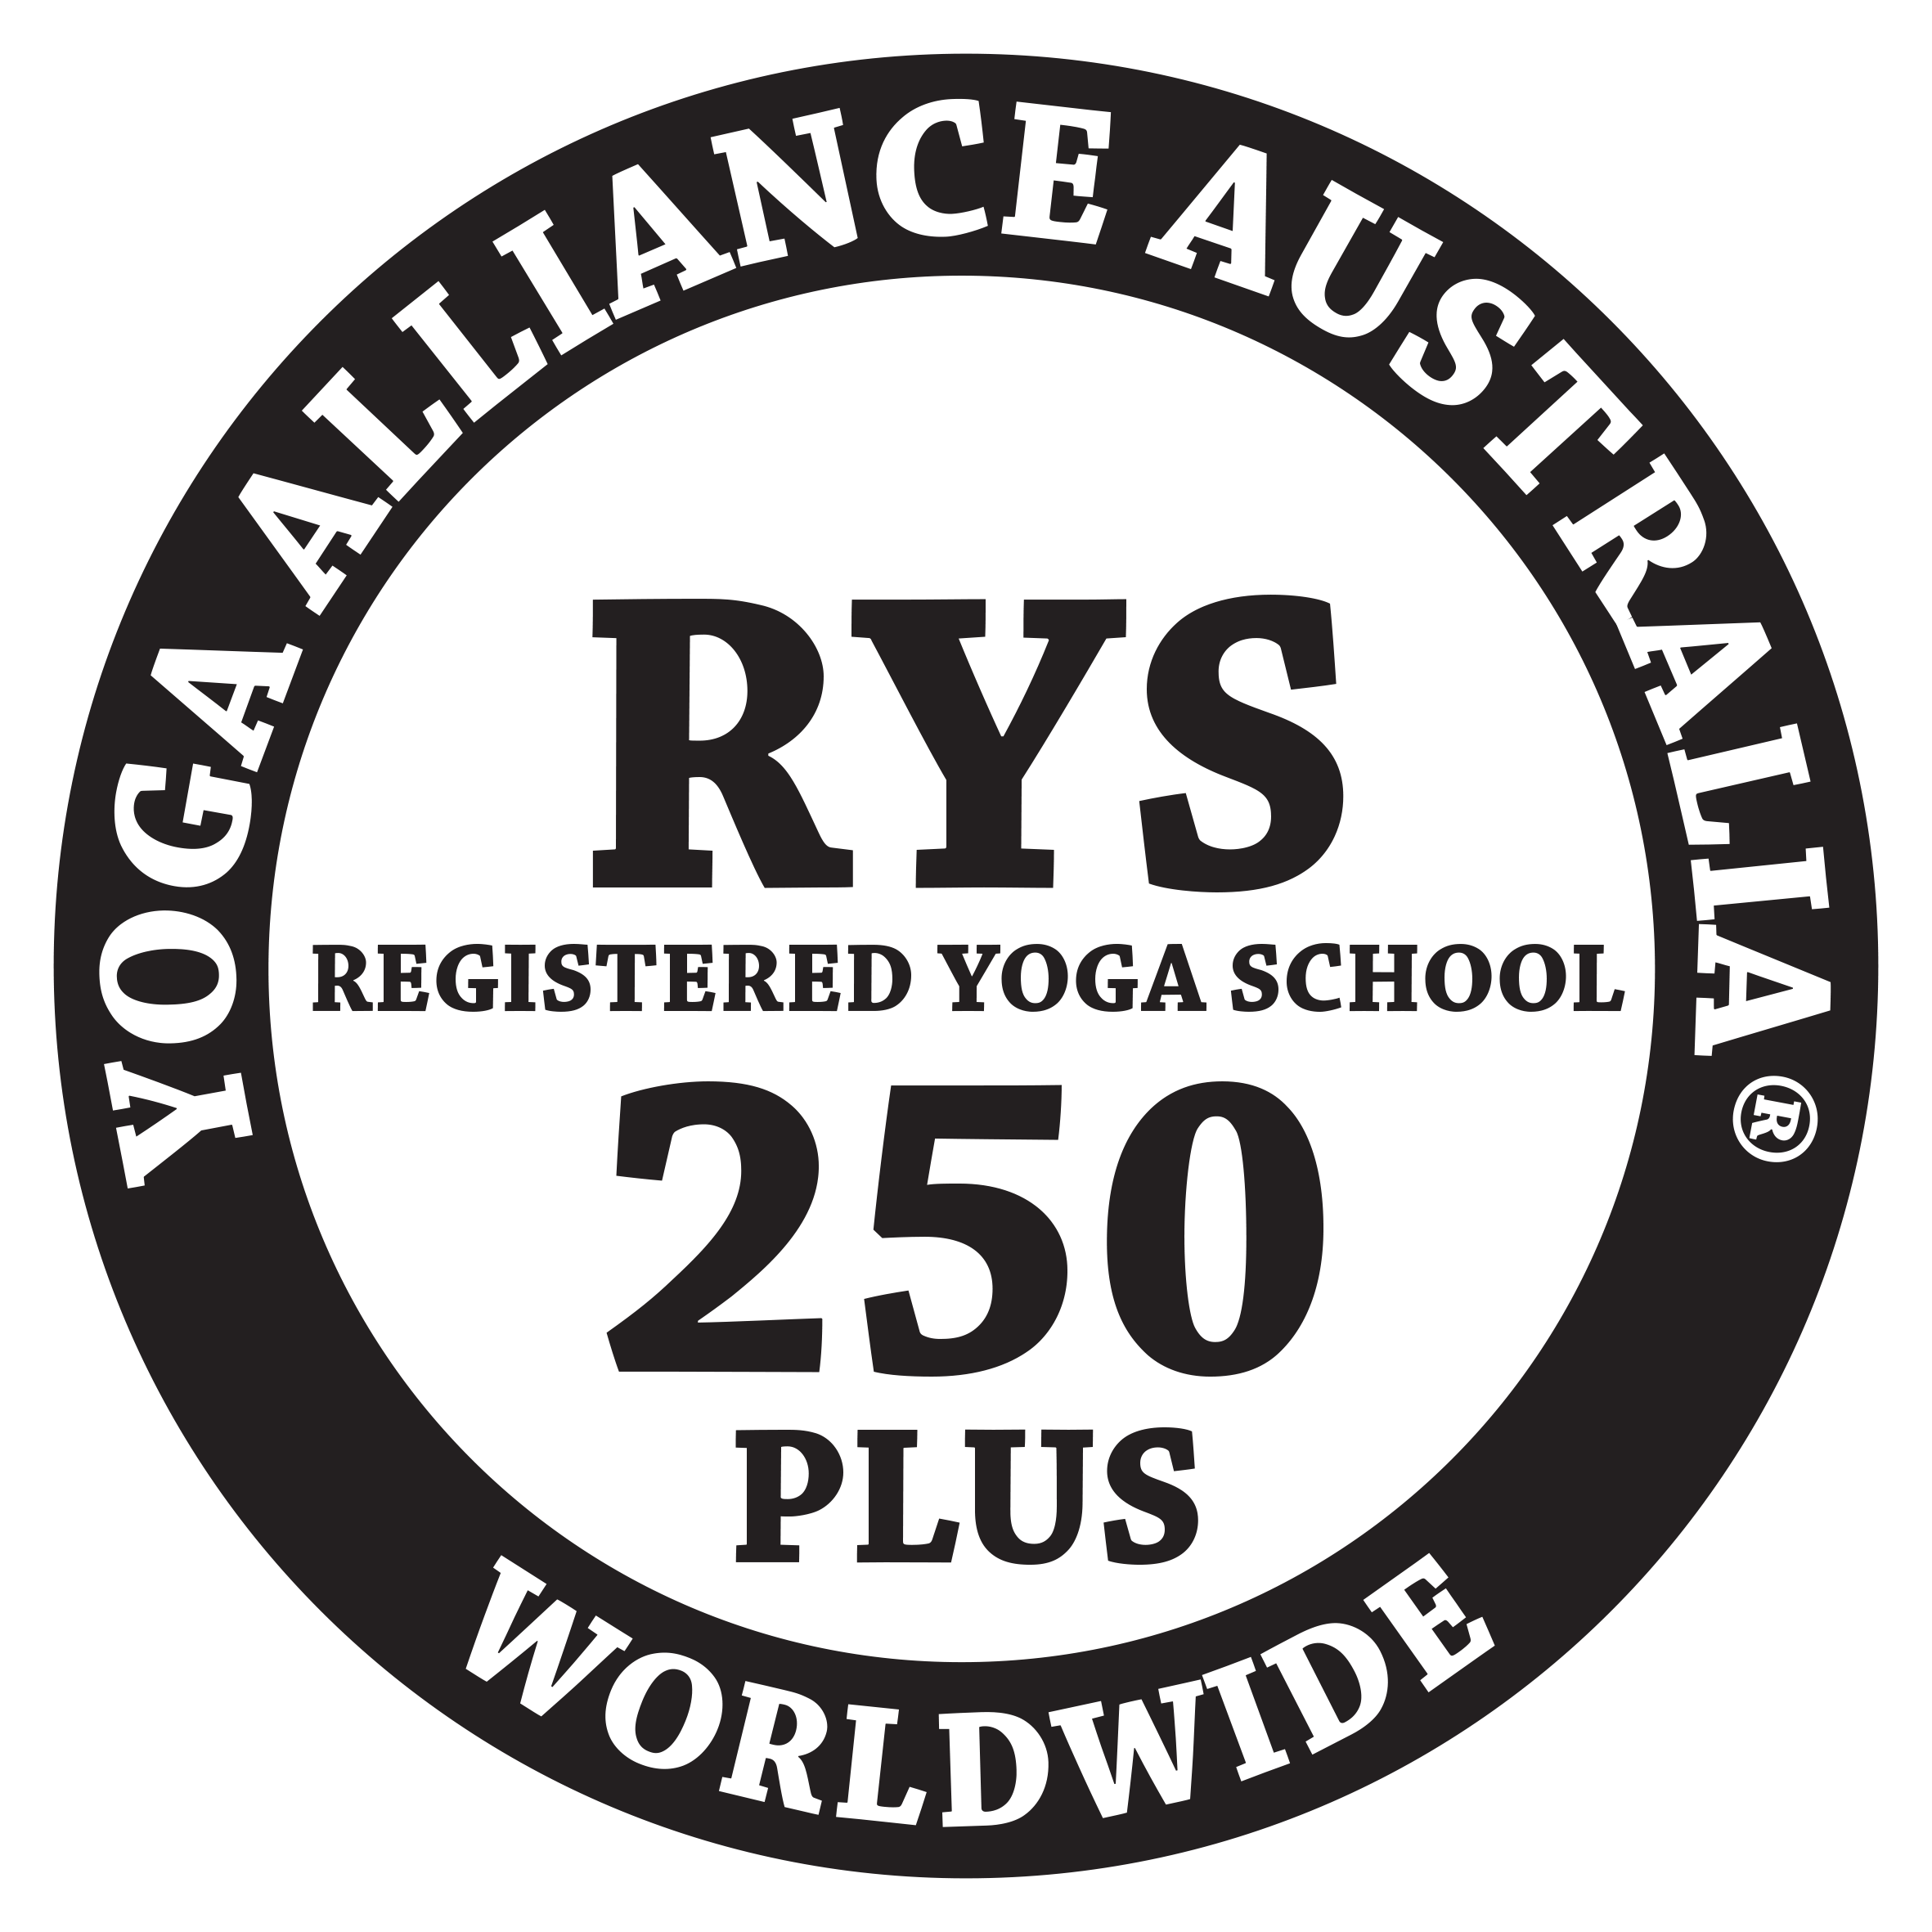 Yoga Alliance Australia & Italy Introduced New standards ...